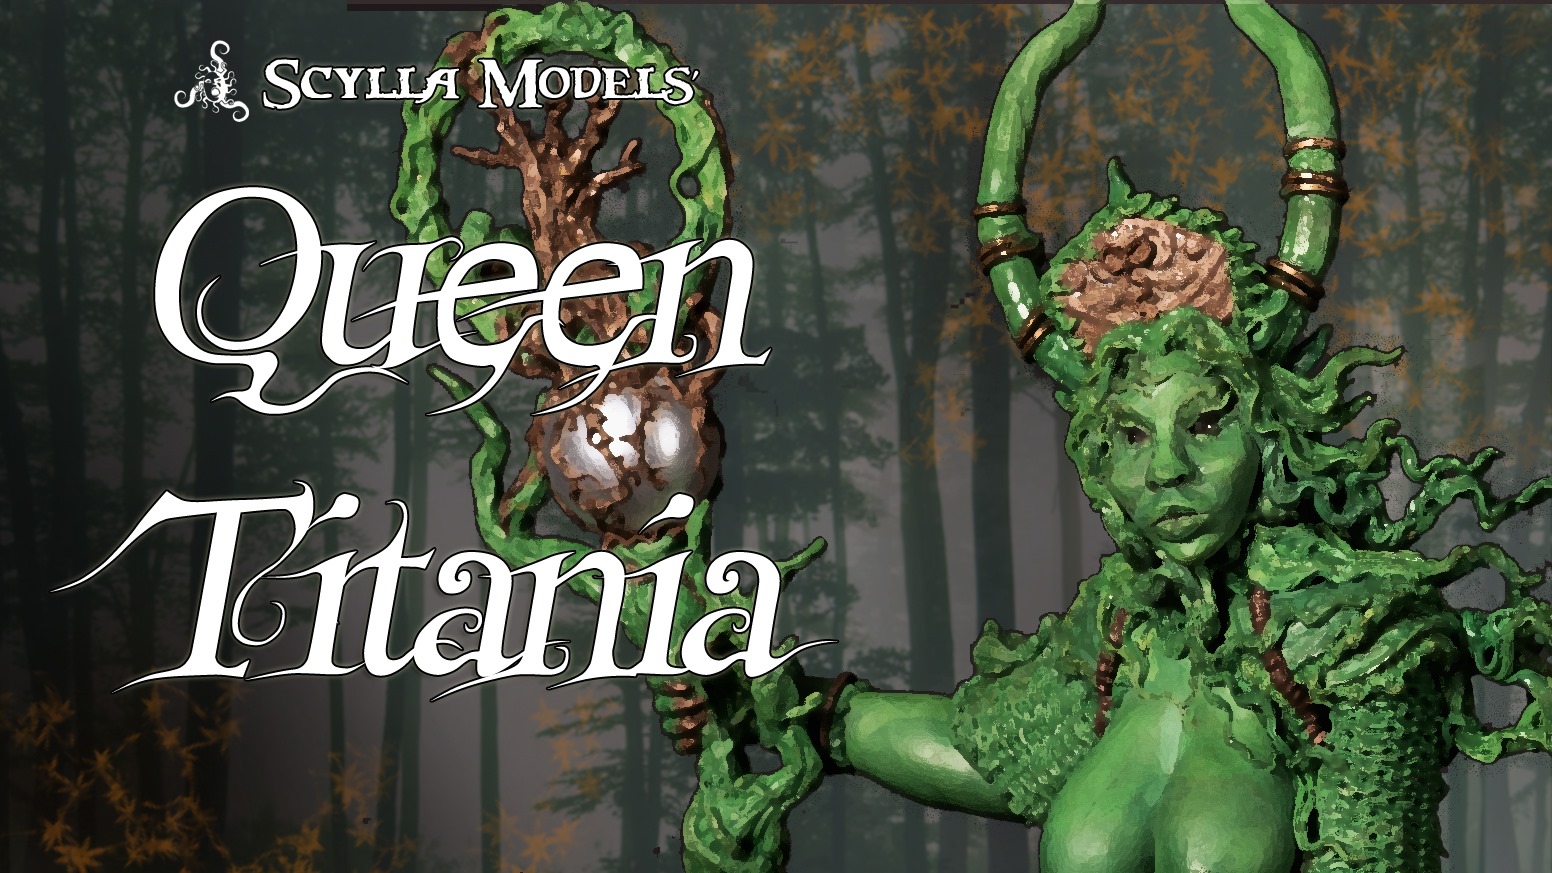 Scylla models: Queen Titania. Kickstarter coming soon